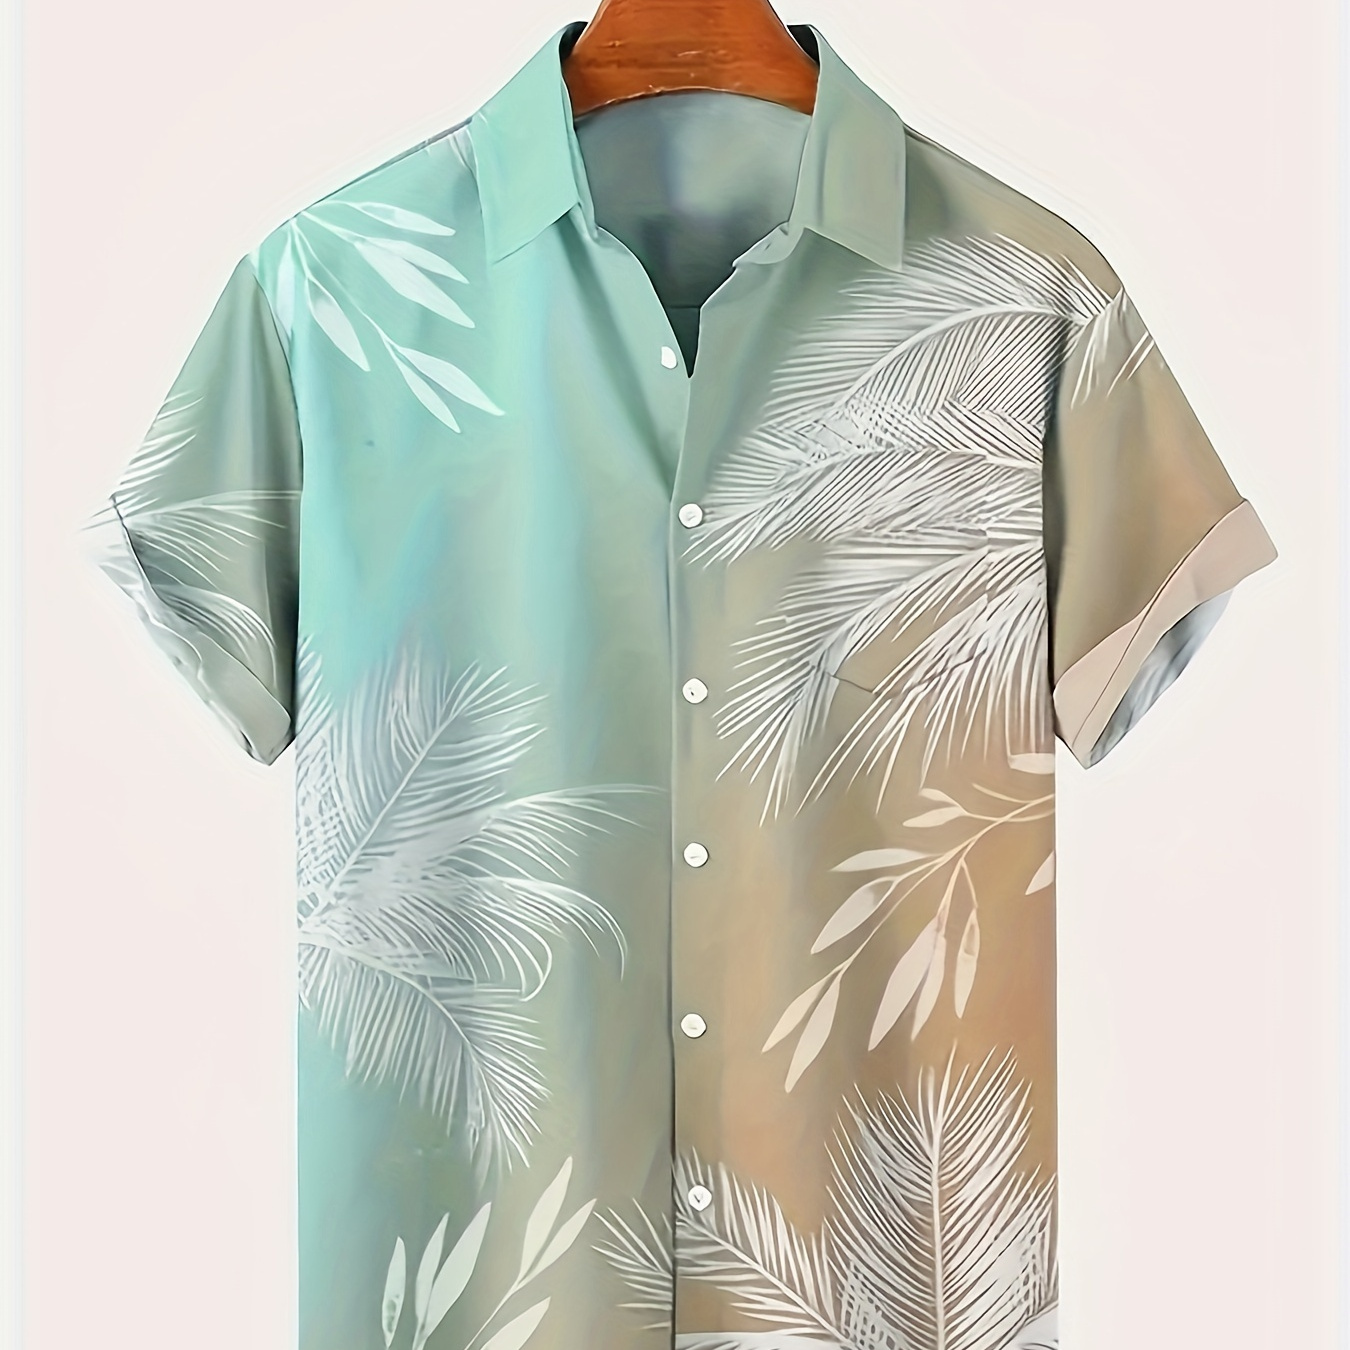 

Plus Size Men's Tropical Leaf Print Shirt For Summer, Hawaiian Style Short Sleeve Shirt For Beach Vacation